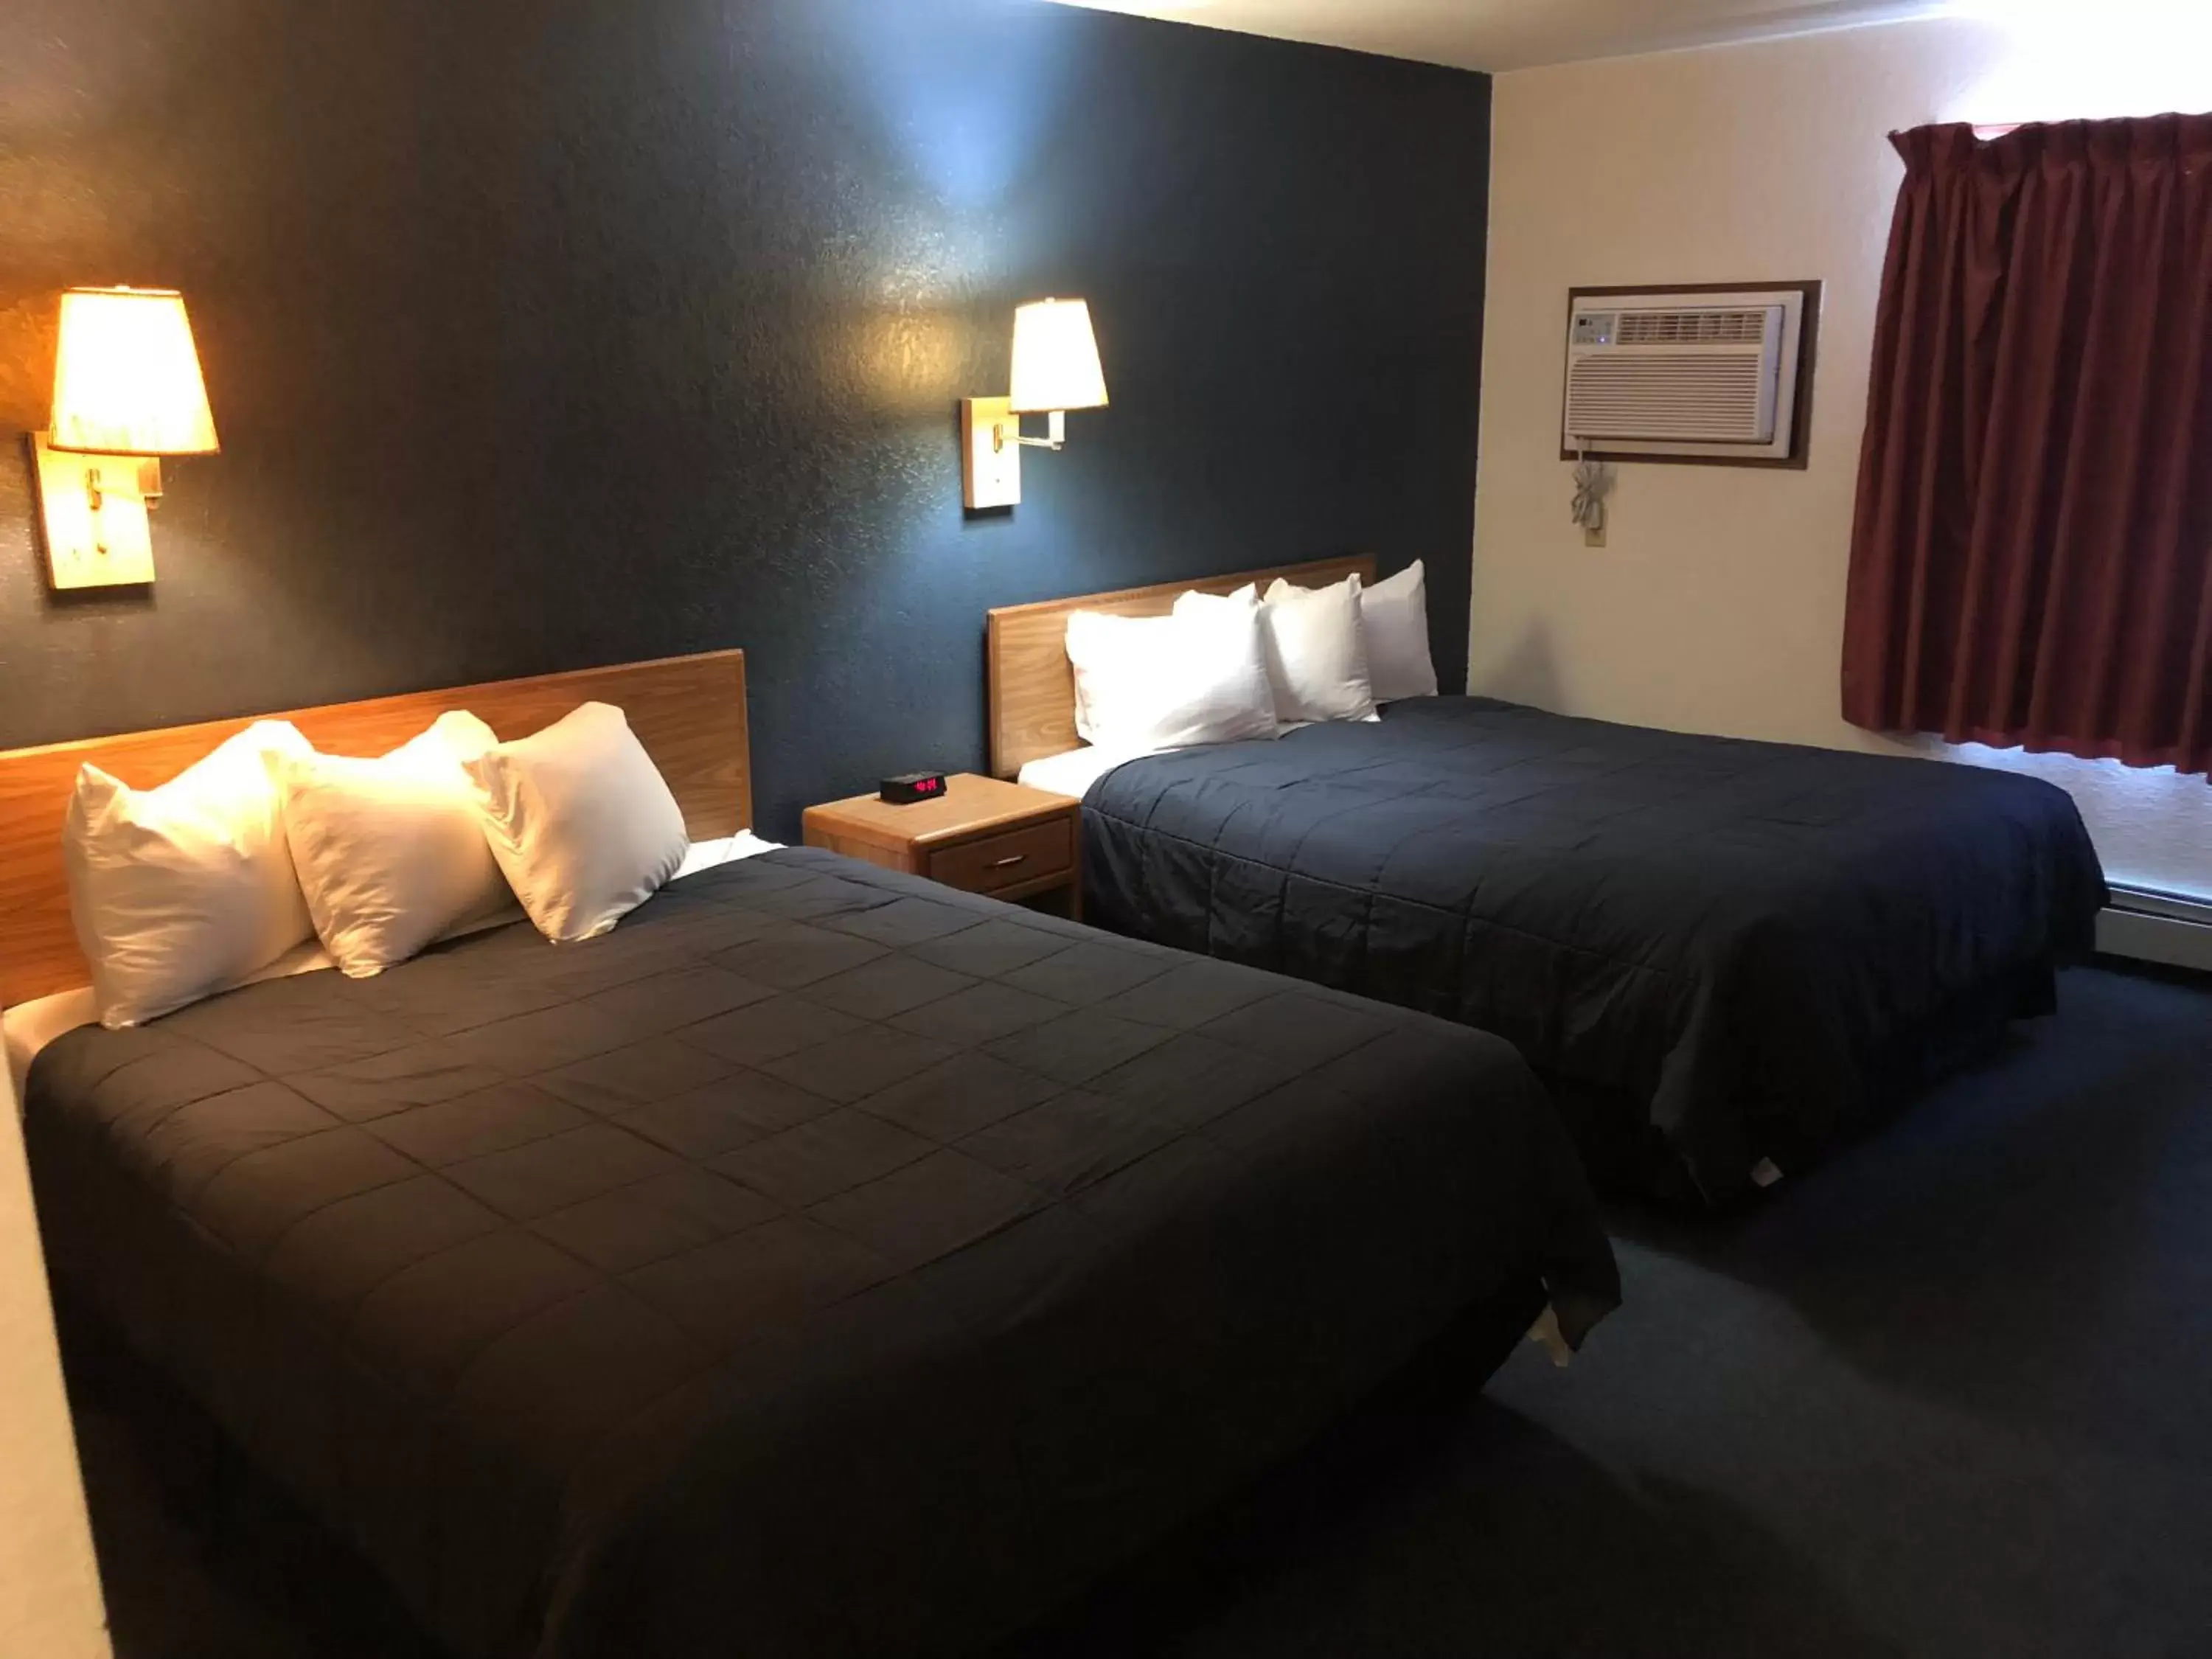 Bedroom, Bed in AmericInn Motel - Monticello